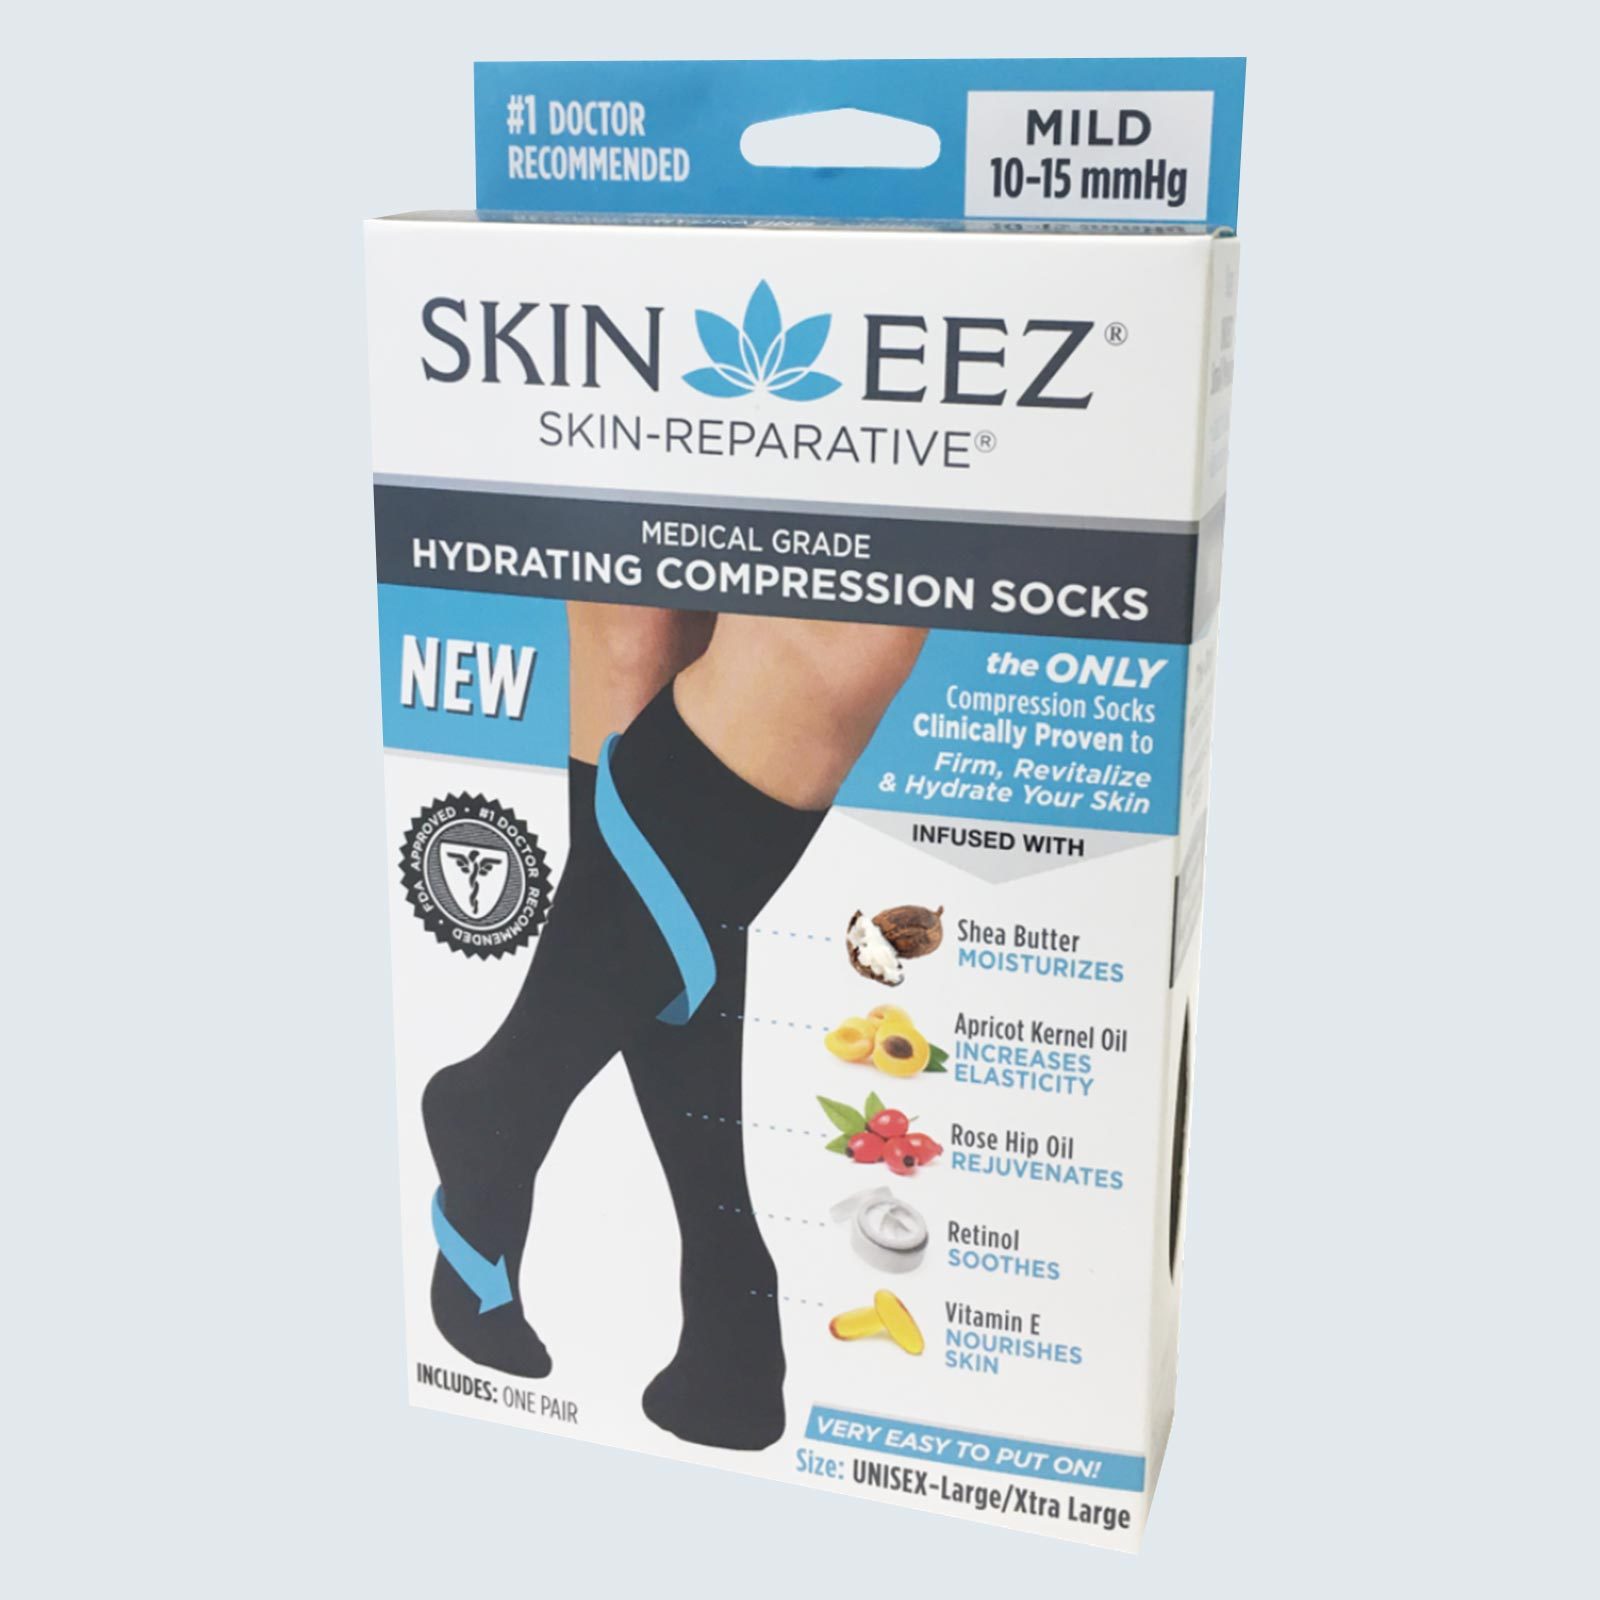 Skineez Skin-Reparative Hydrating Compression Socks